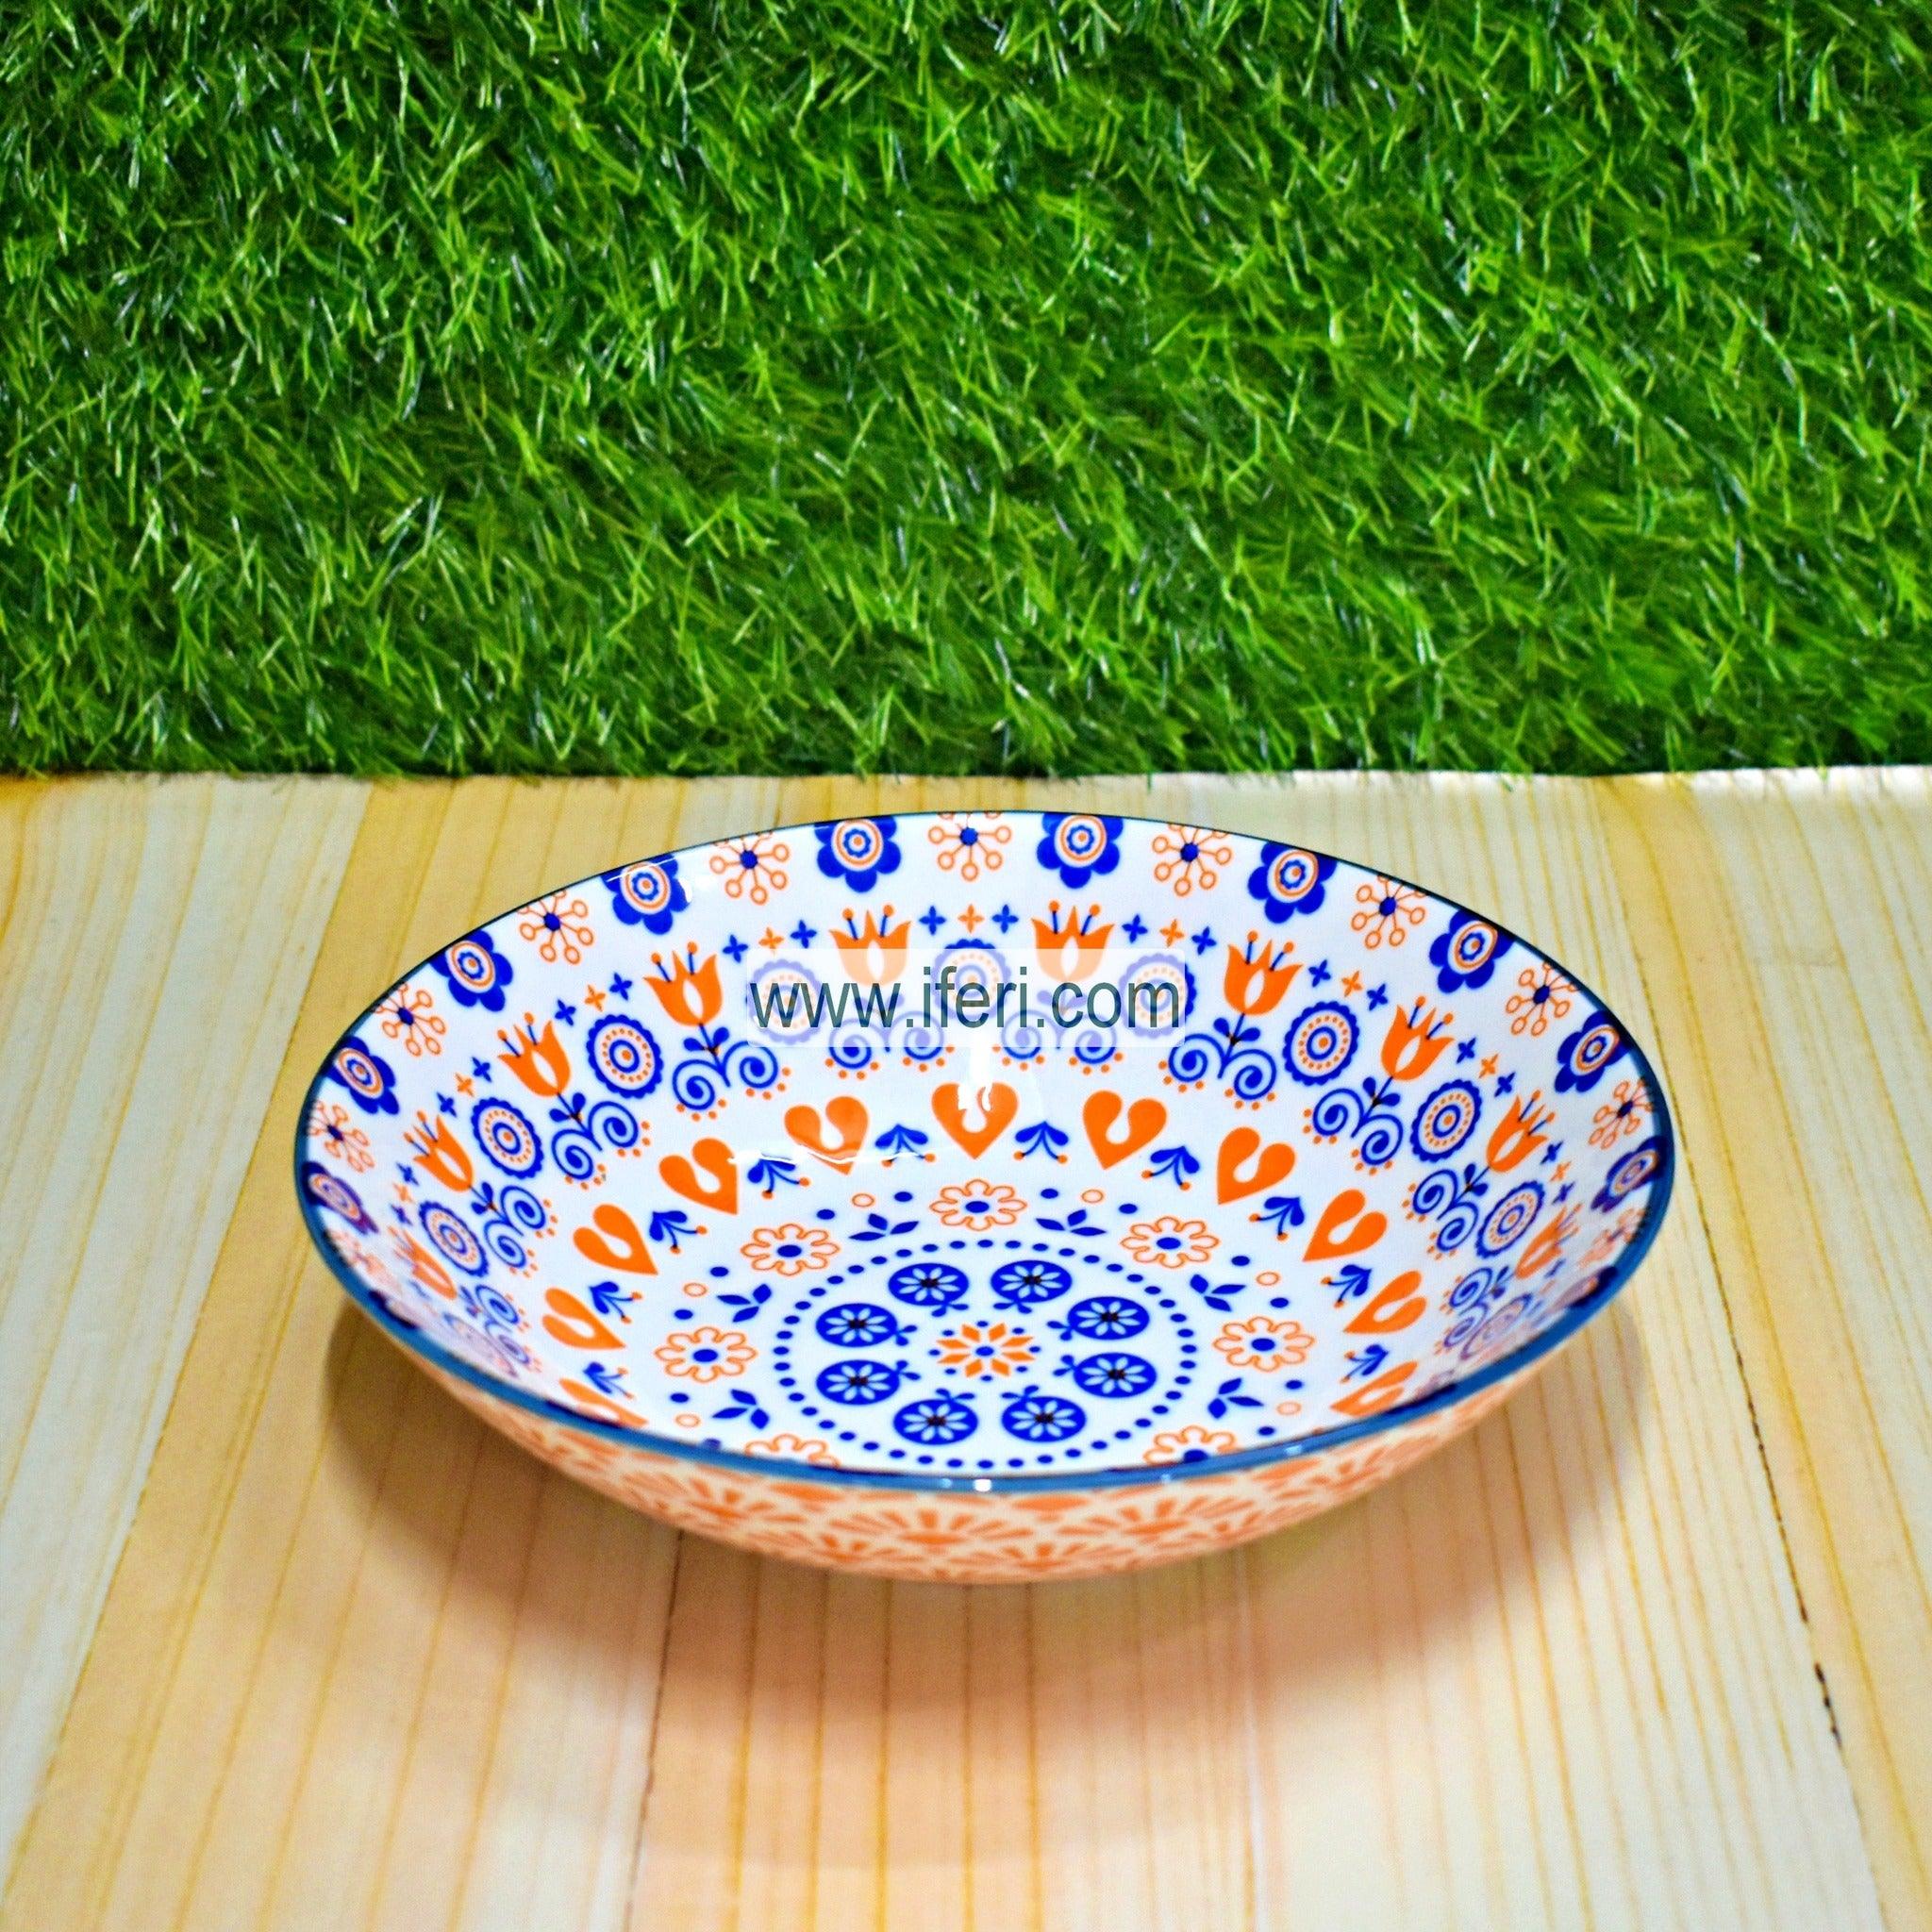 9 Inch Ceramic Curry Serving Dish SY0066 Price in Bangladesh - iferi.com